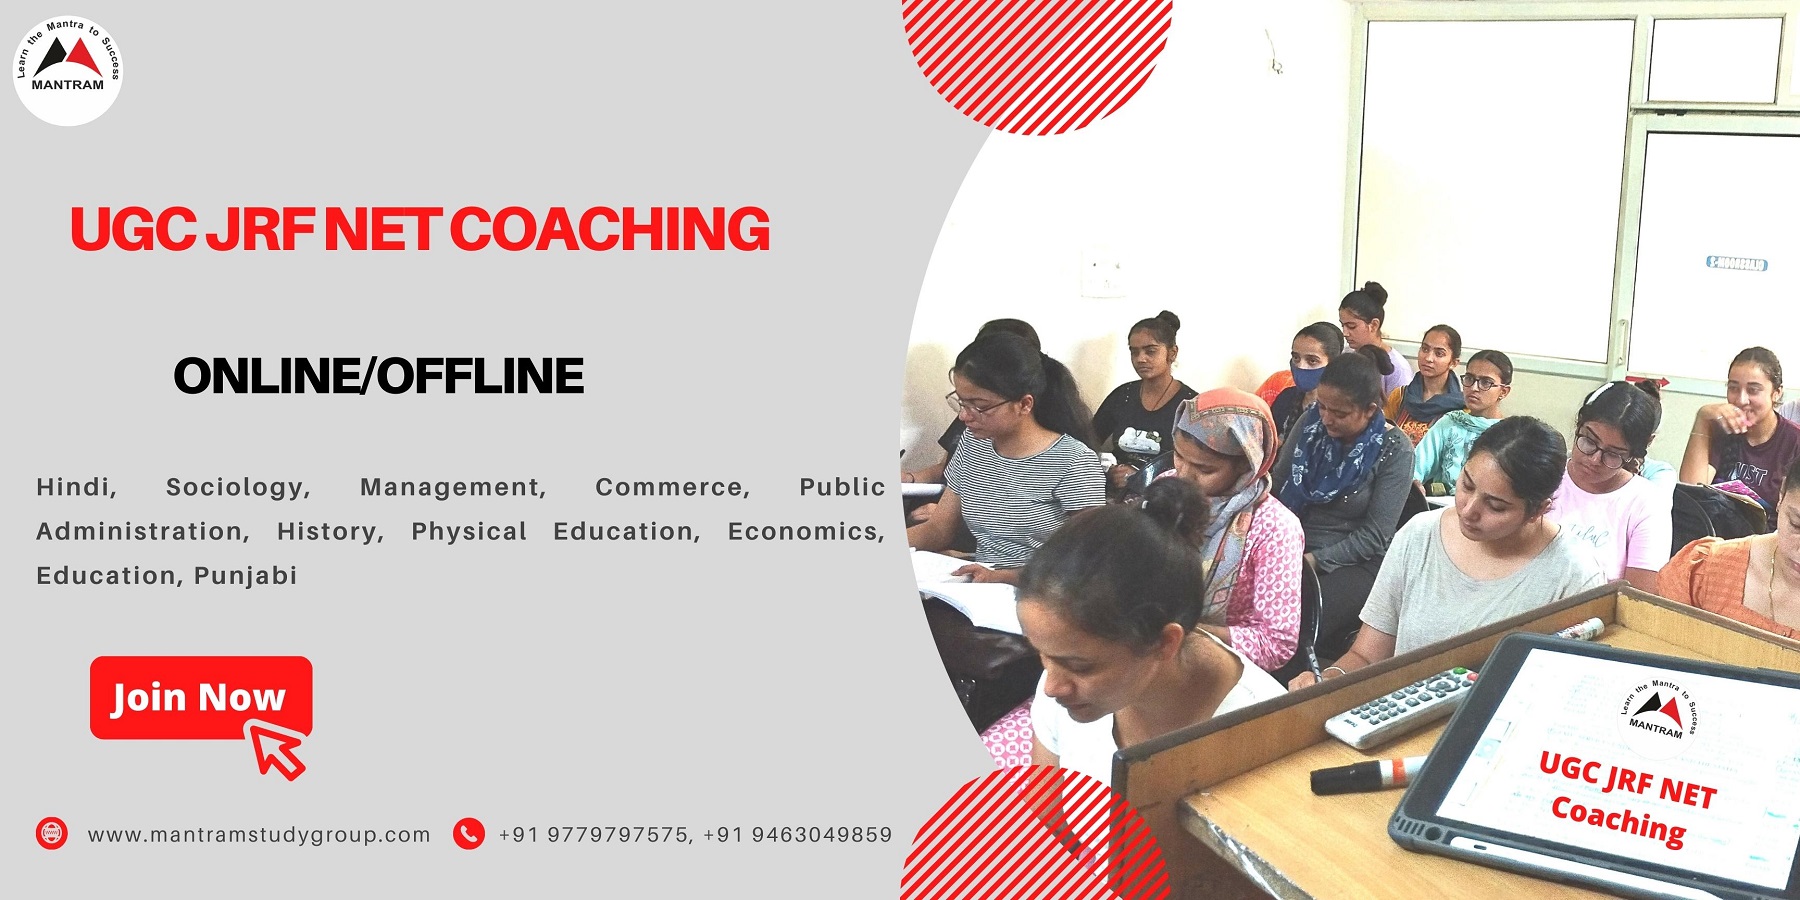 UGC JRF NET Coaching in Ludhiana Punjab